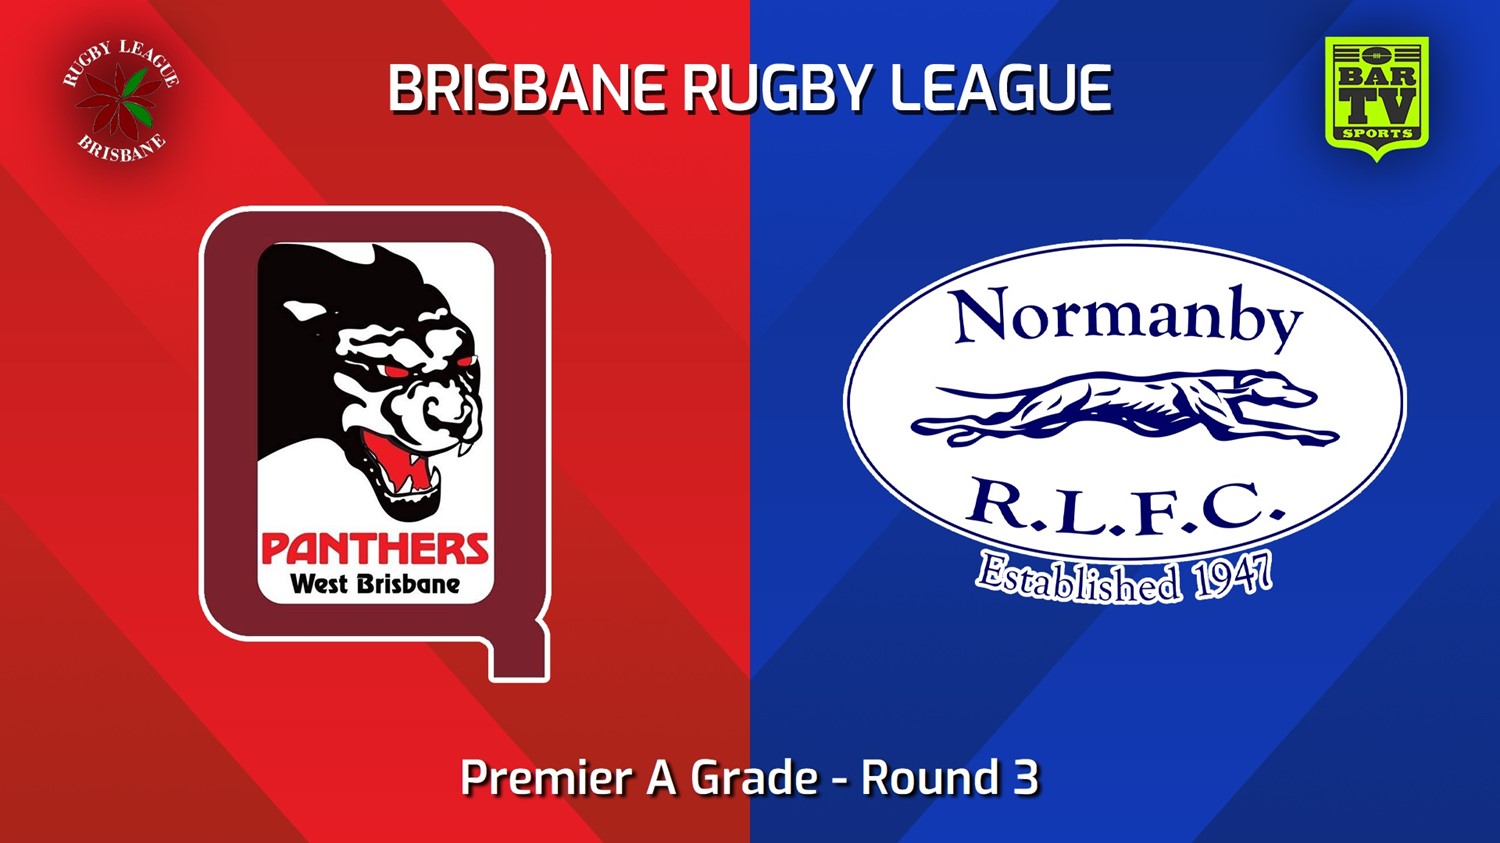 240420-video-BRL Round 3 - Premier A Grade - West Brisbane Panthers v Normanby Hounds Minigame Slate Image